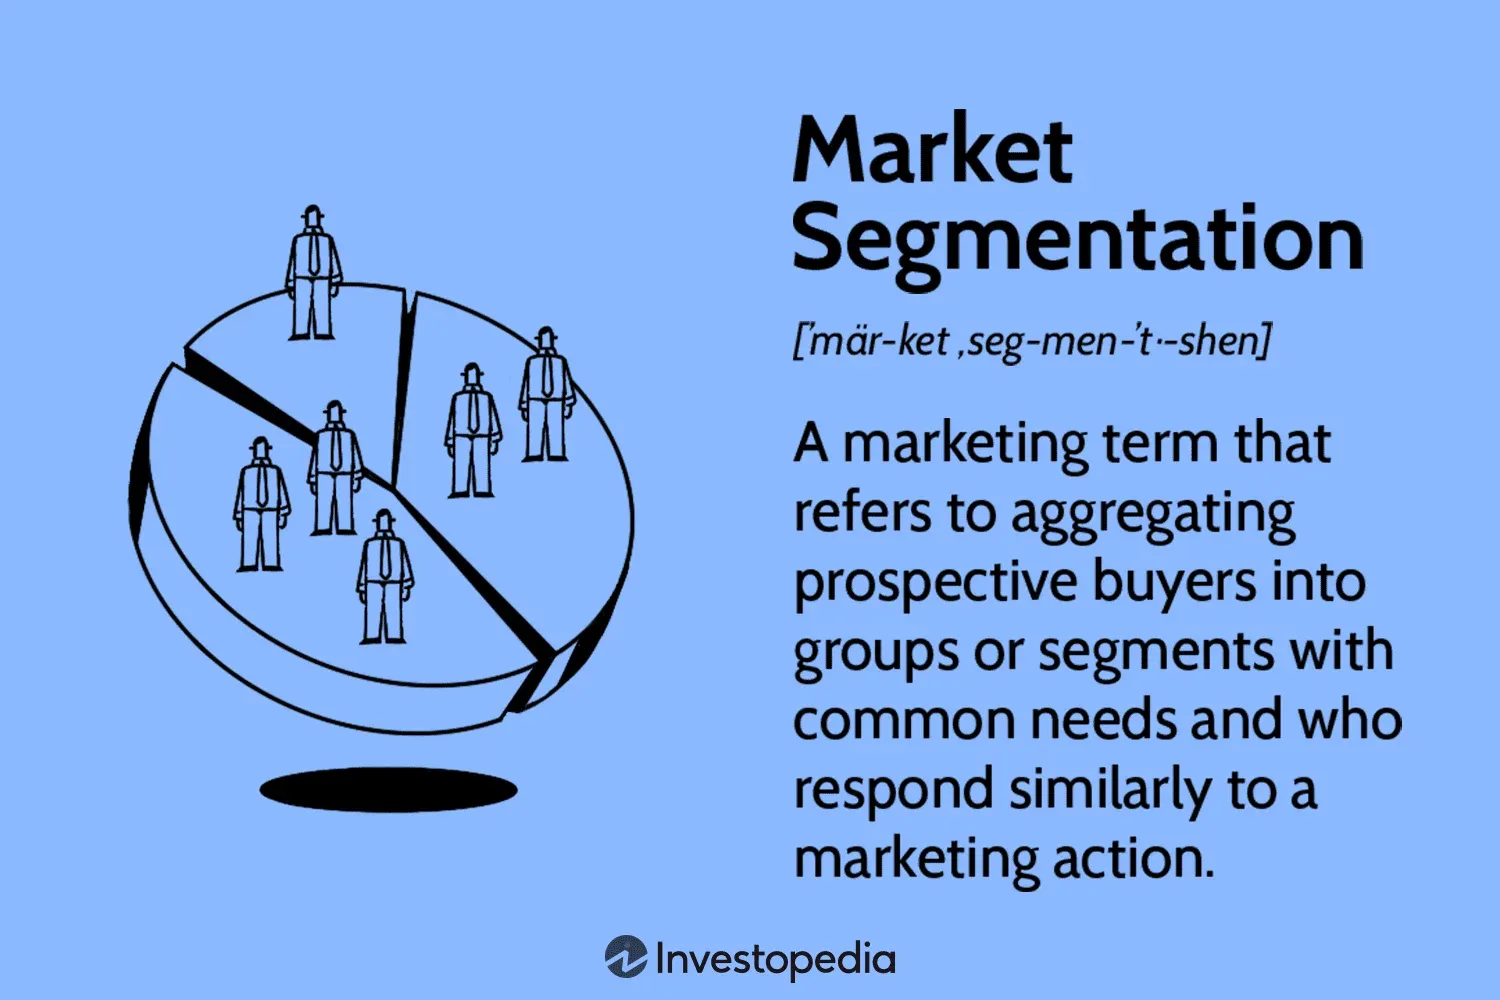 What is Customer Segmentation?